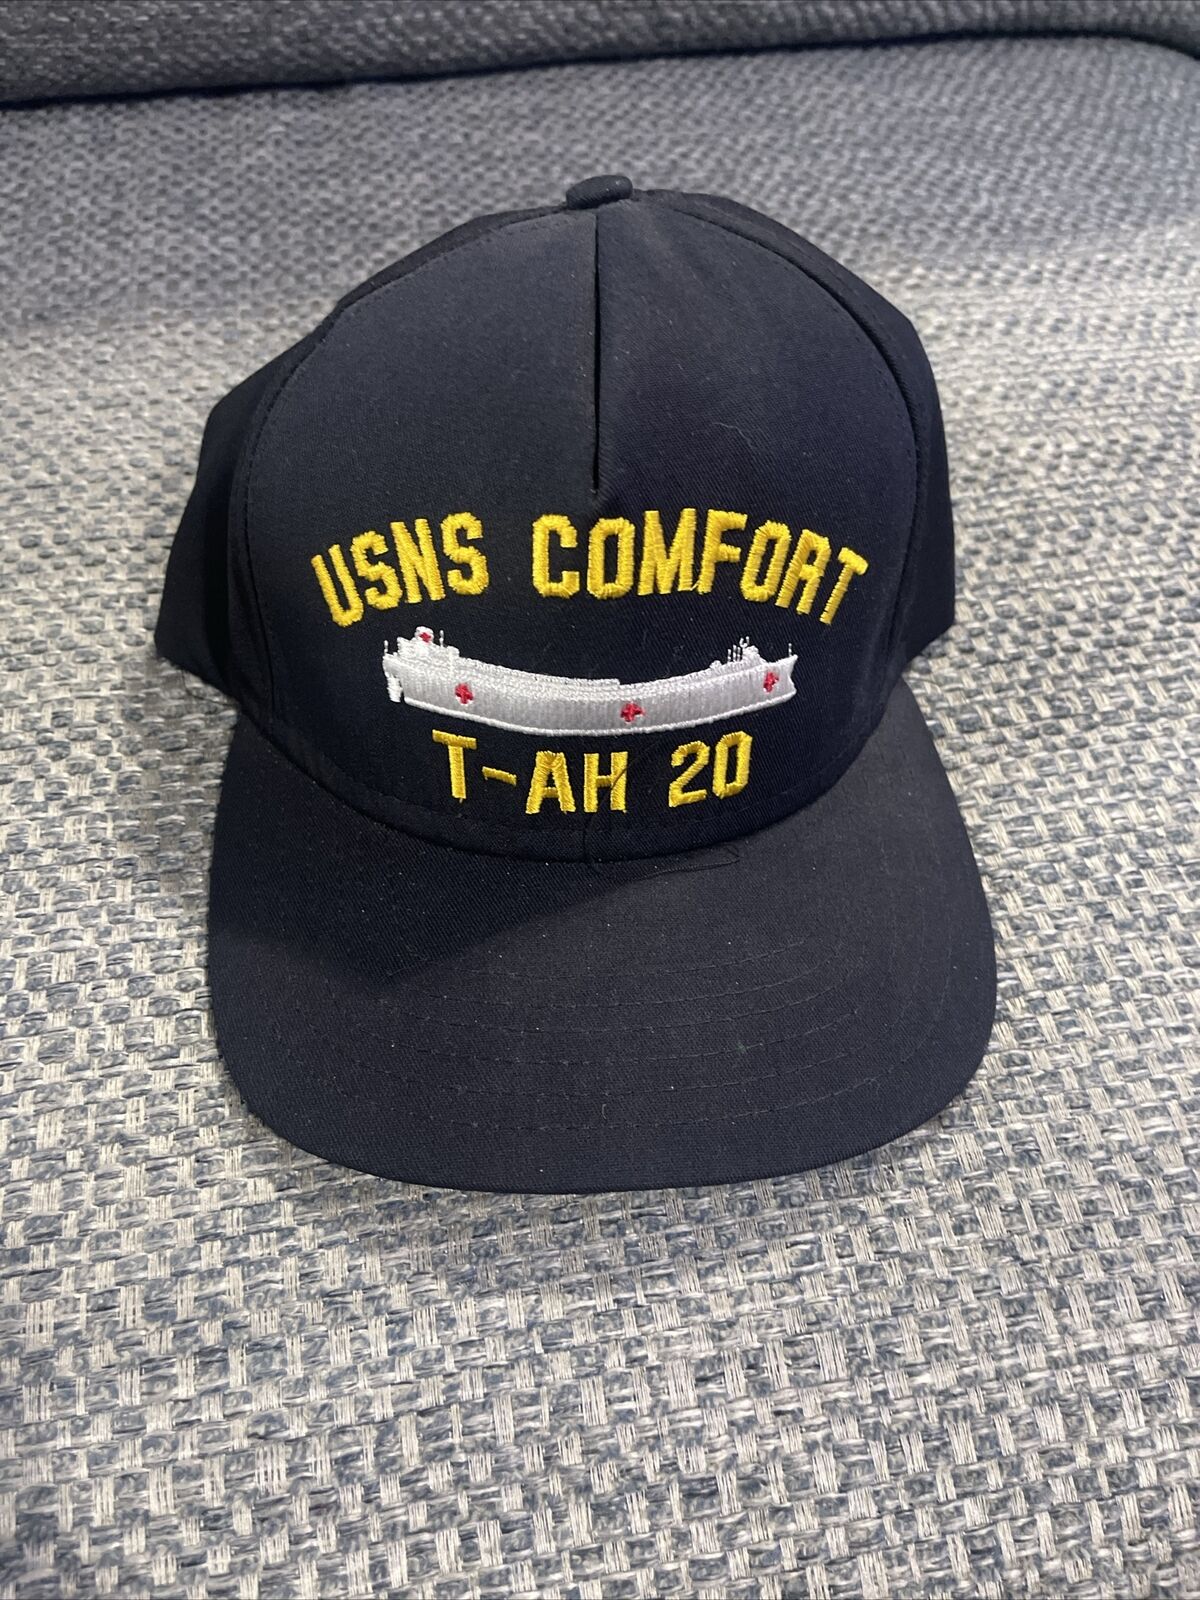 NEW U S NAVY USNS COMFORT T-AH 20 Blue Adjustable Hat Cap Made In USA